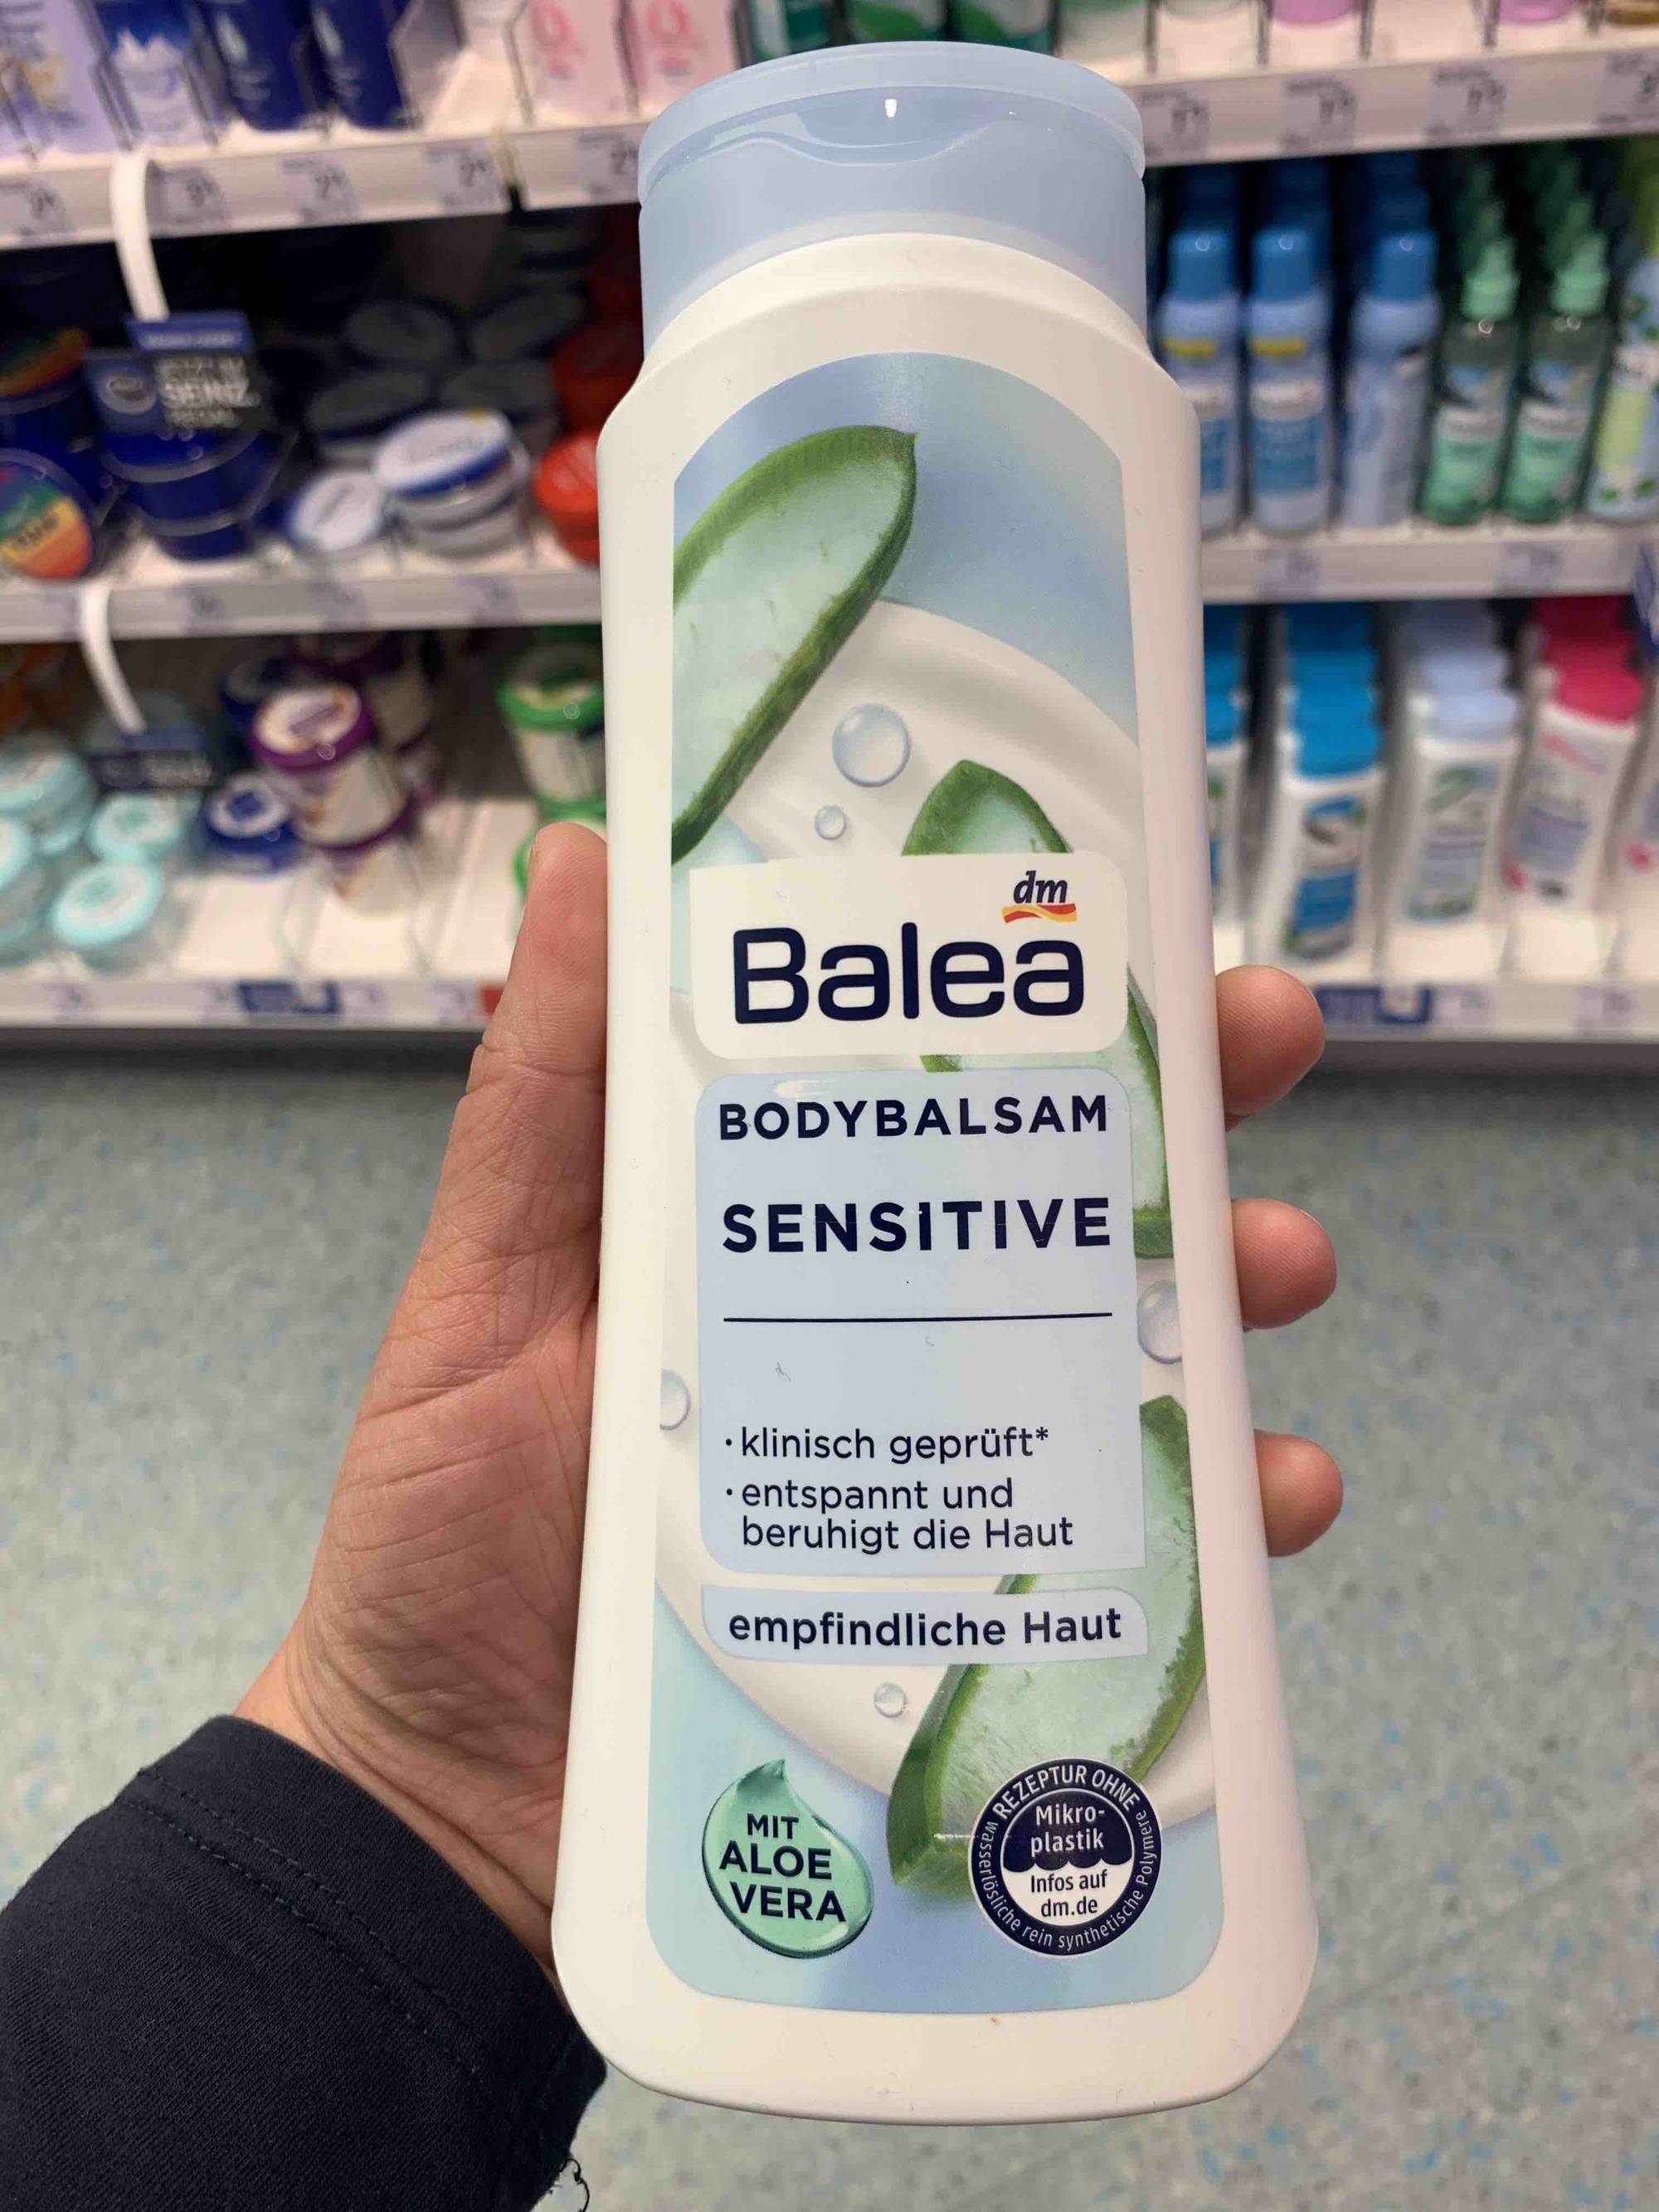 BALEA - Bodybalsam sensitive mit aloe vera